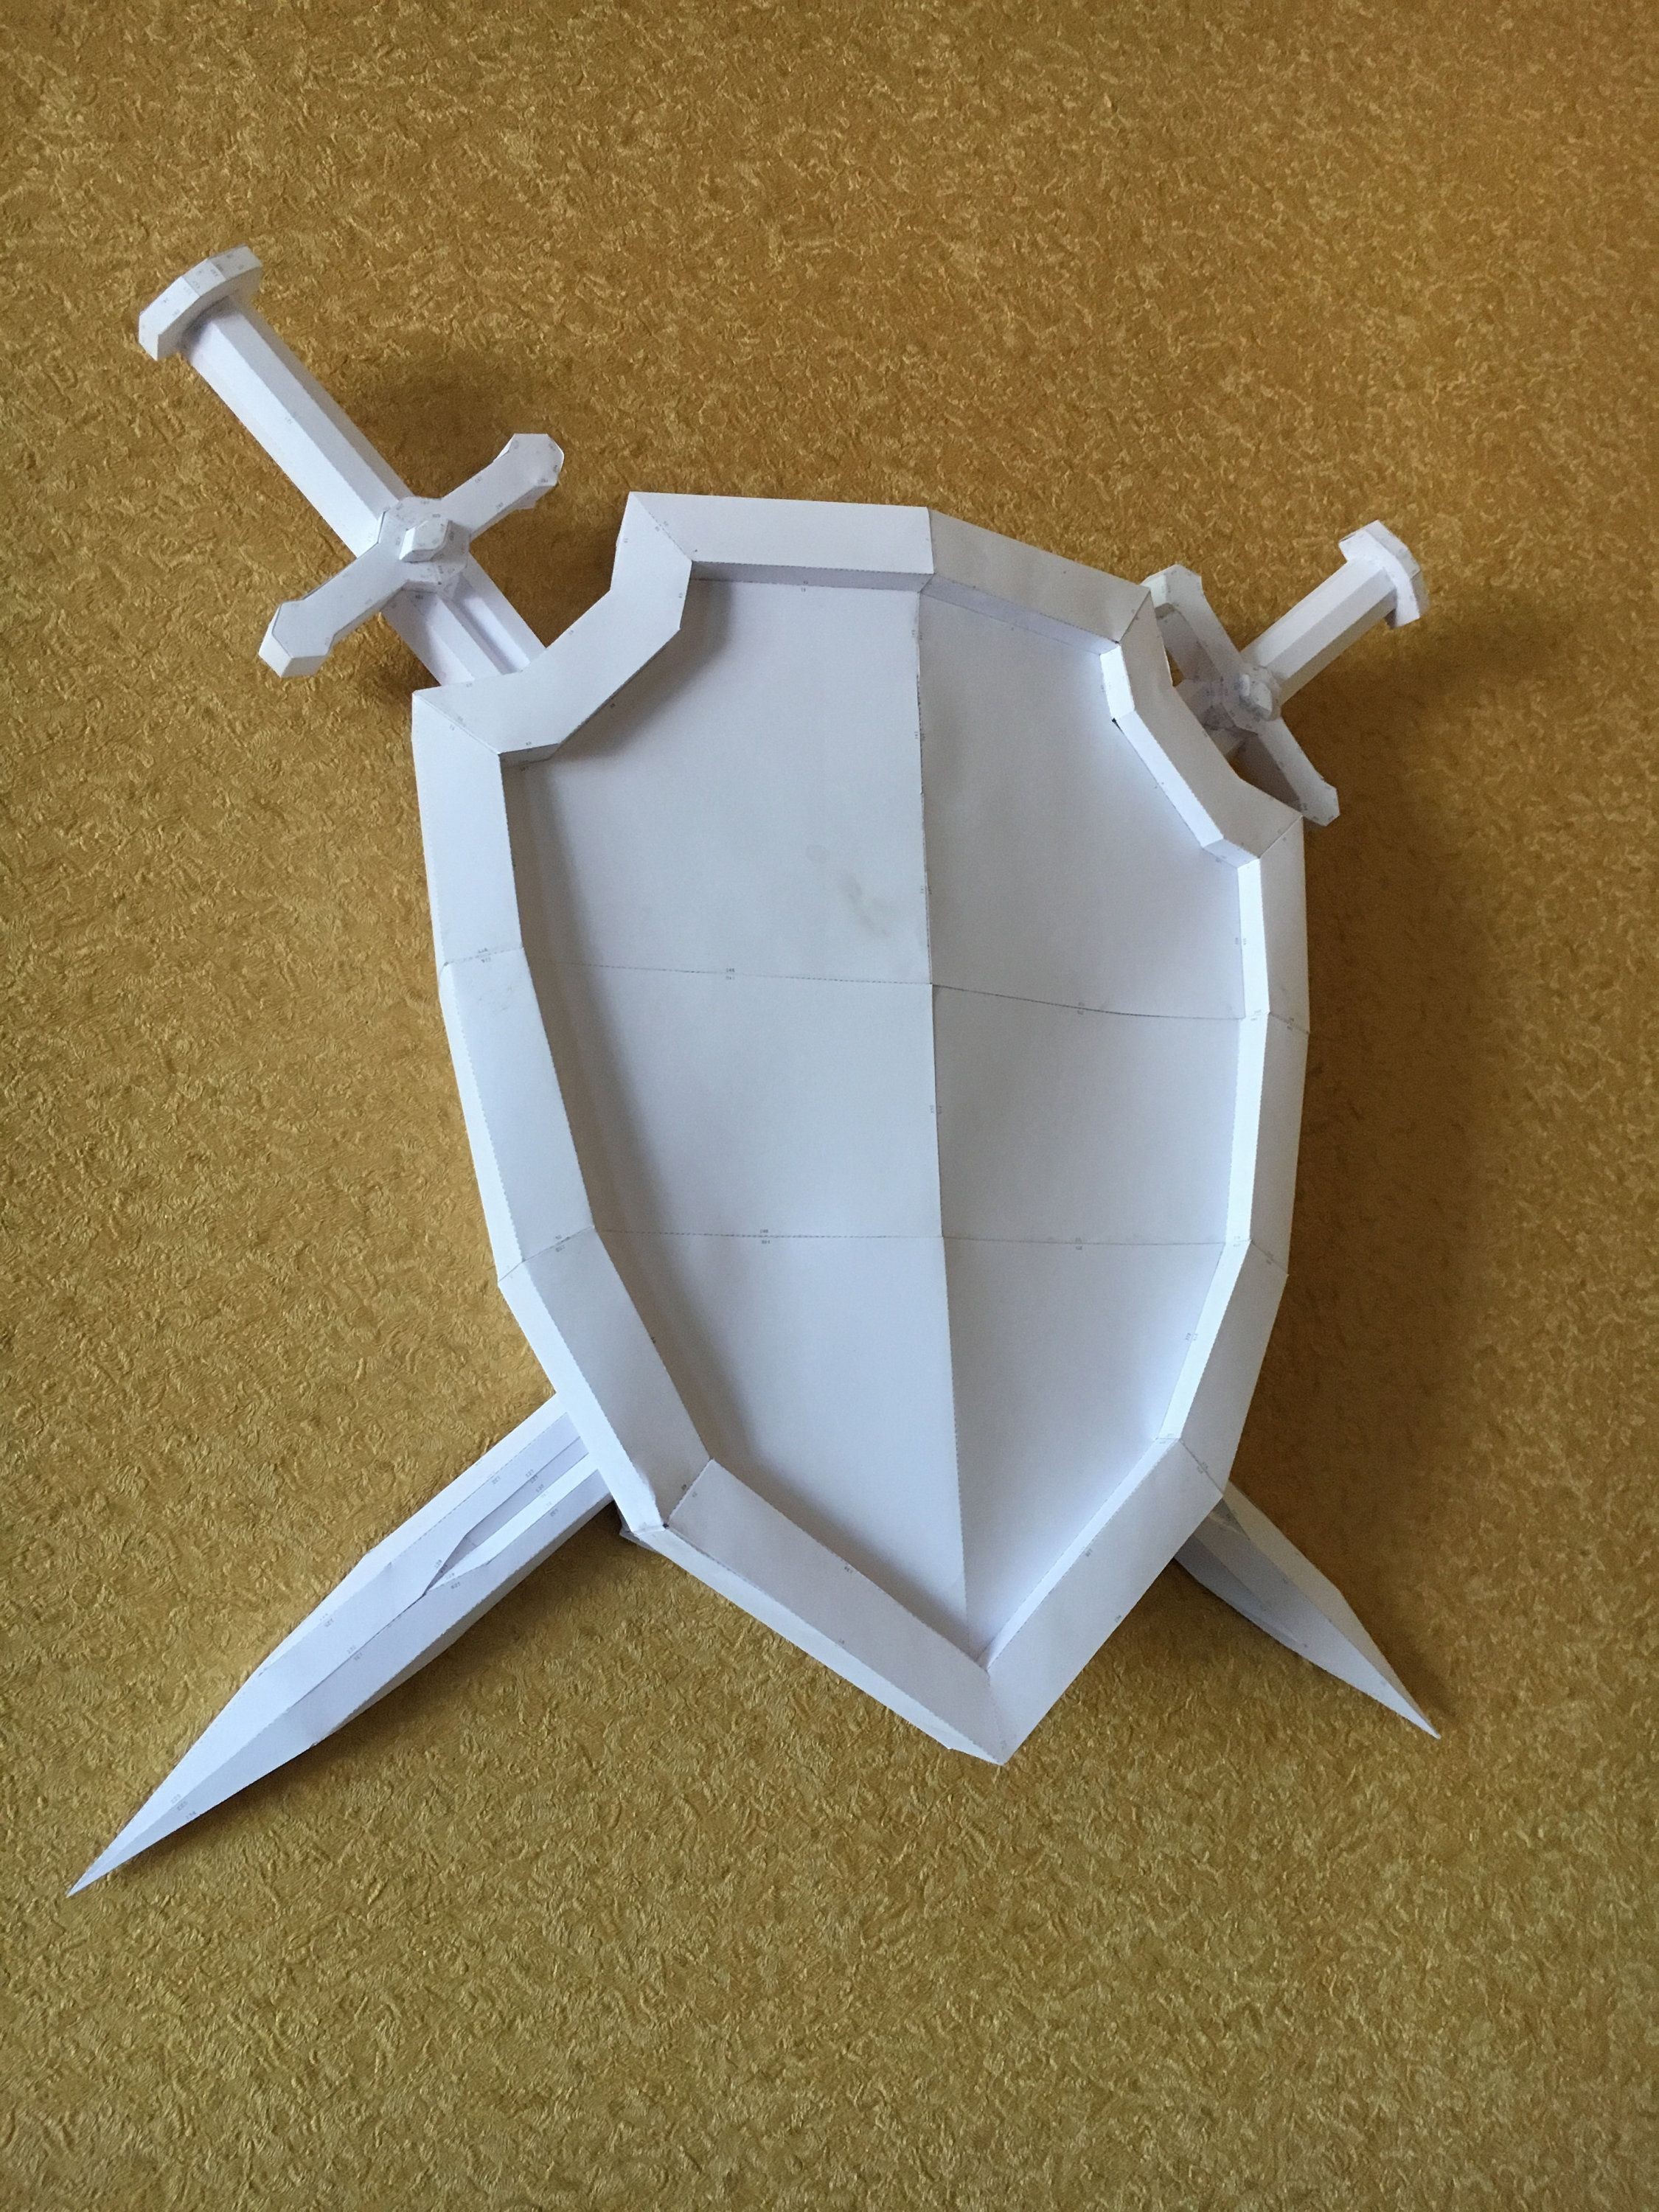 New Papercraft Sword Shield Diy Papercraft Model ÐÑÐ¼Ð°Ð¶Ð½ÑÐµ Ð¸Ð·Ð´ÐµÐ Ð¸Ñ